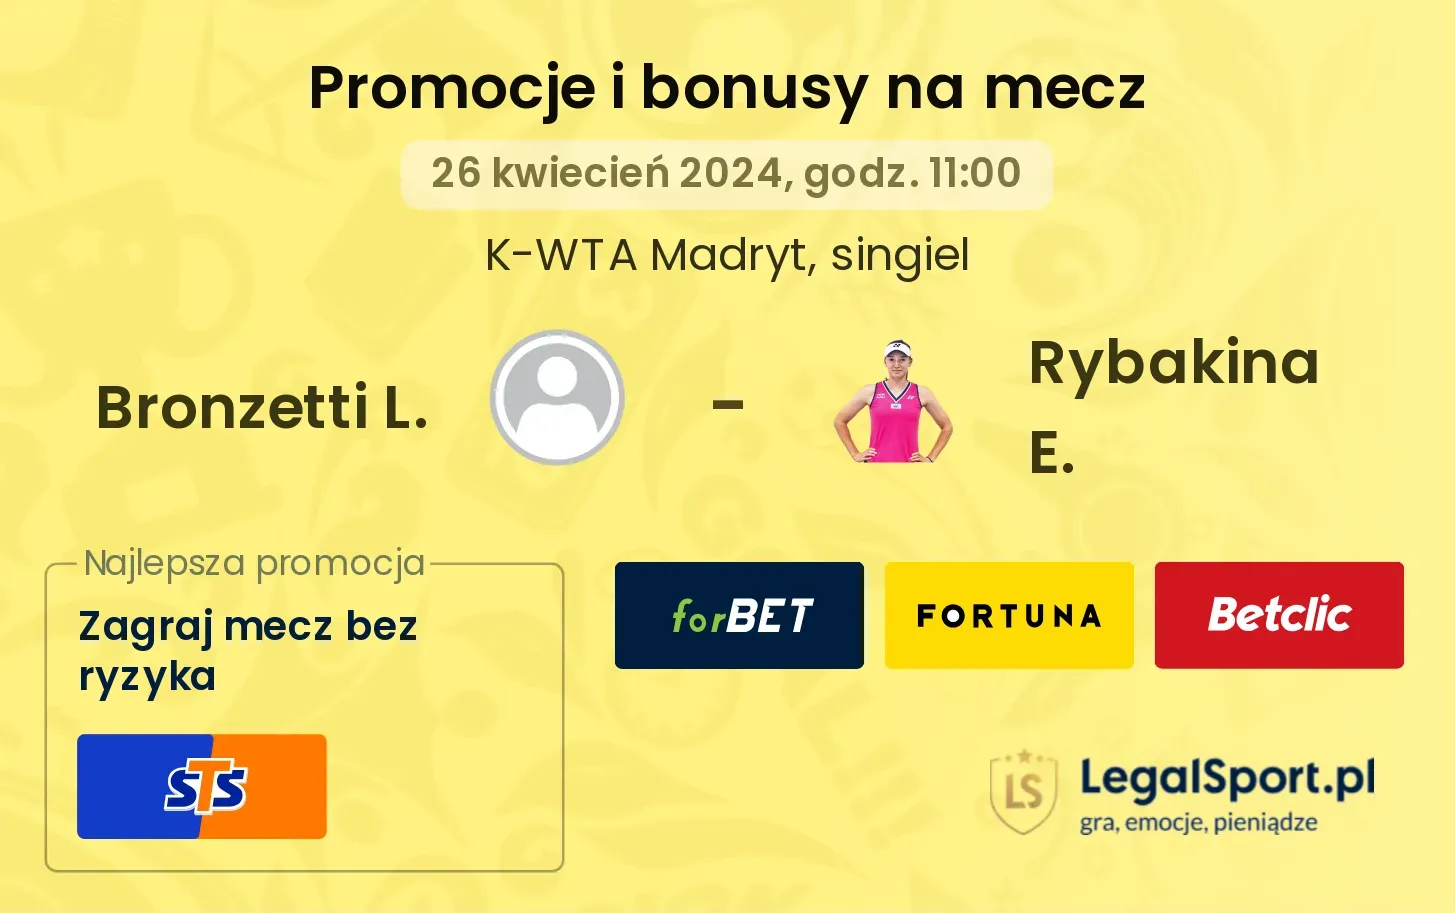 Bronzetti L. - Rybakina E. promocje bonusy na mecz